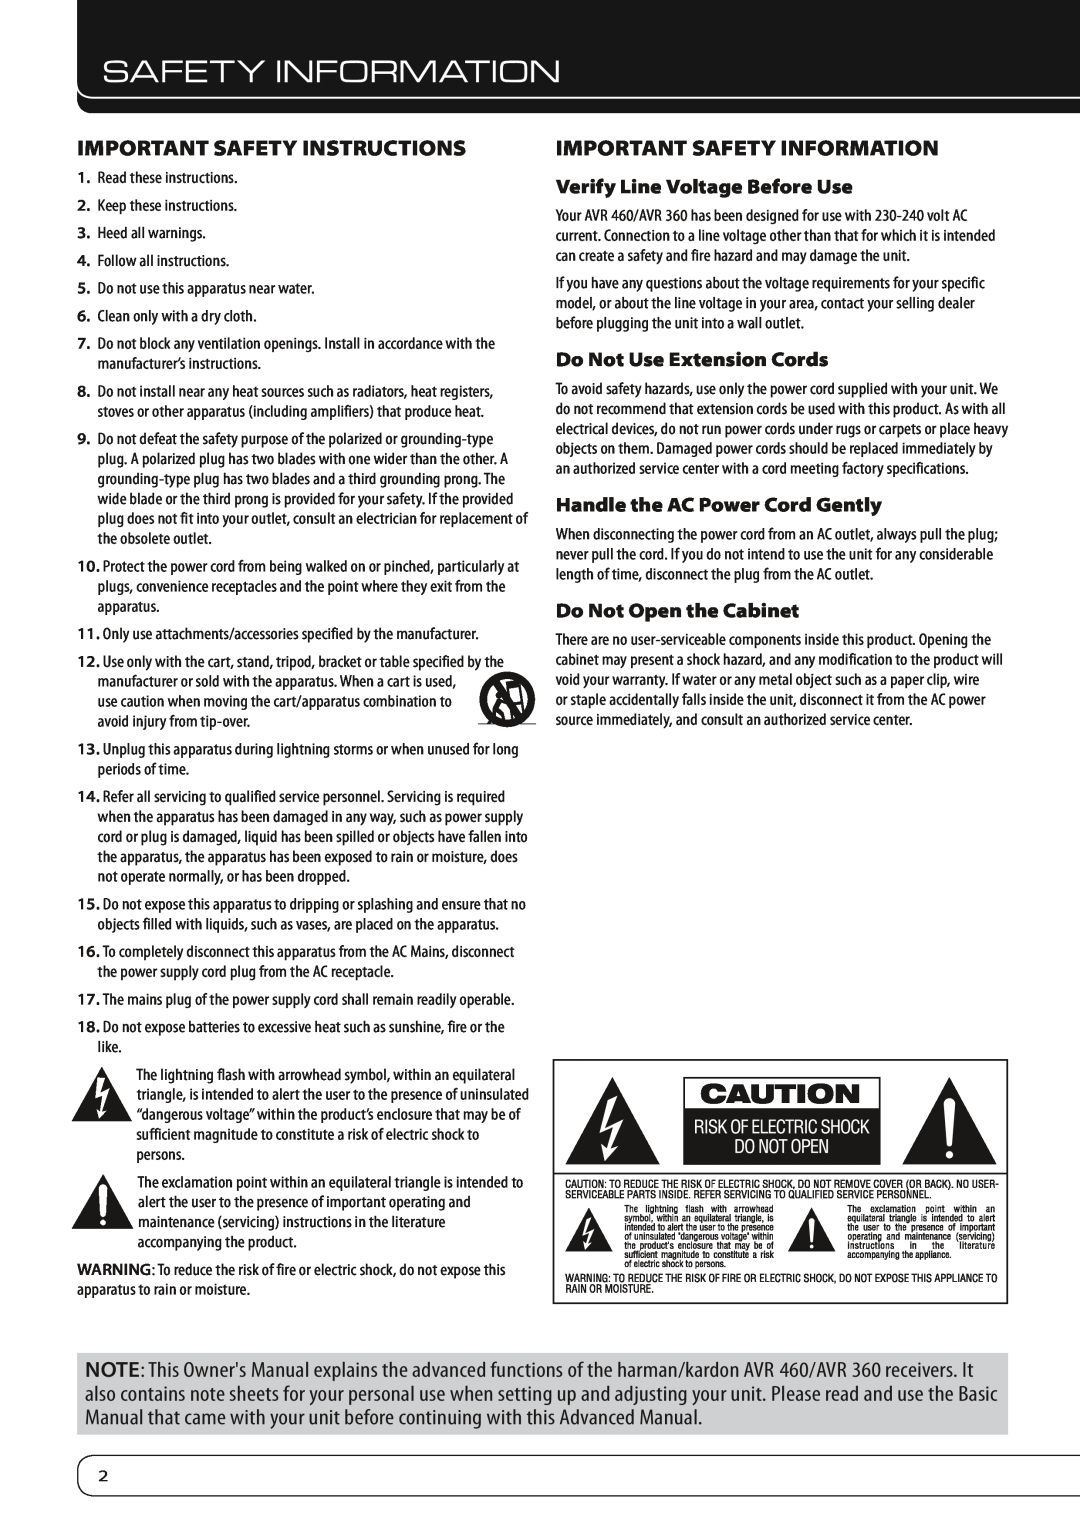 Harman-Kardon AVR 460 Important Safety Instructions, Important Safety Information, Verify Line Voltage Before Use 